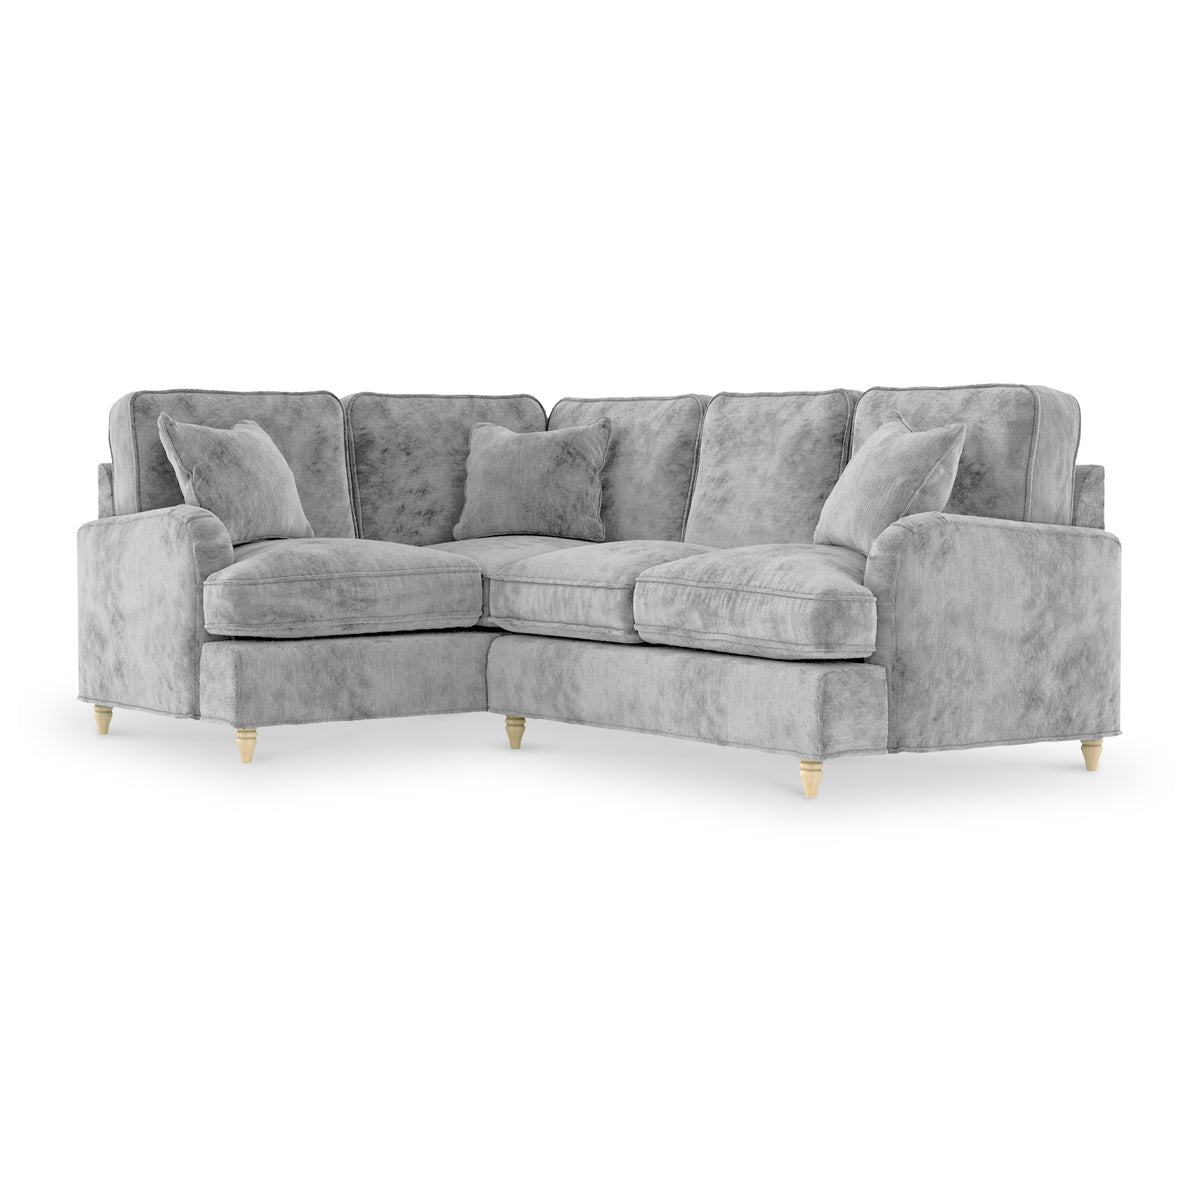 Arthur Ice Grey LH Corner Sofa from Roseland Furniture